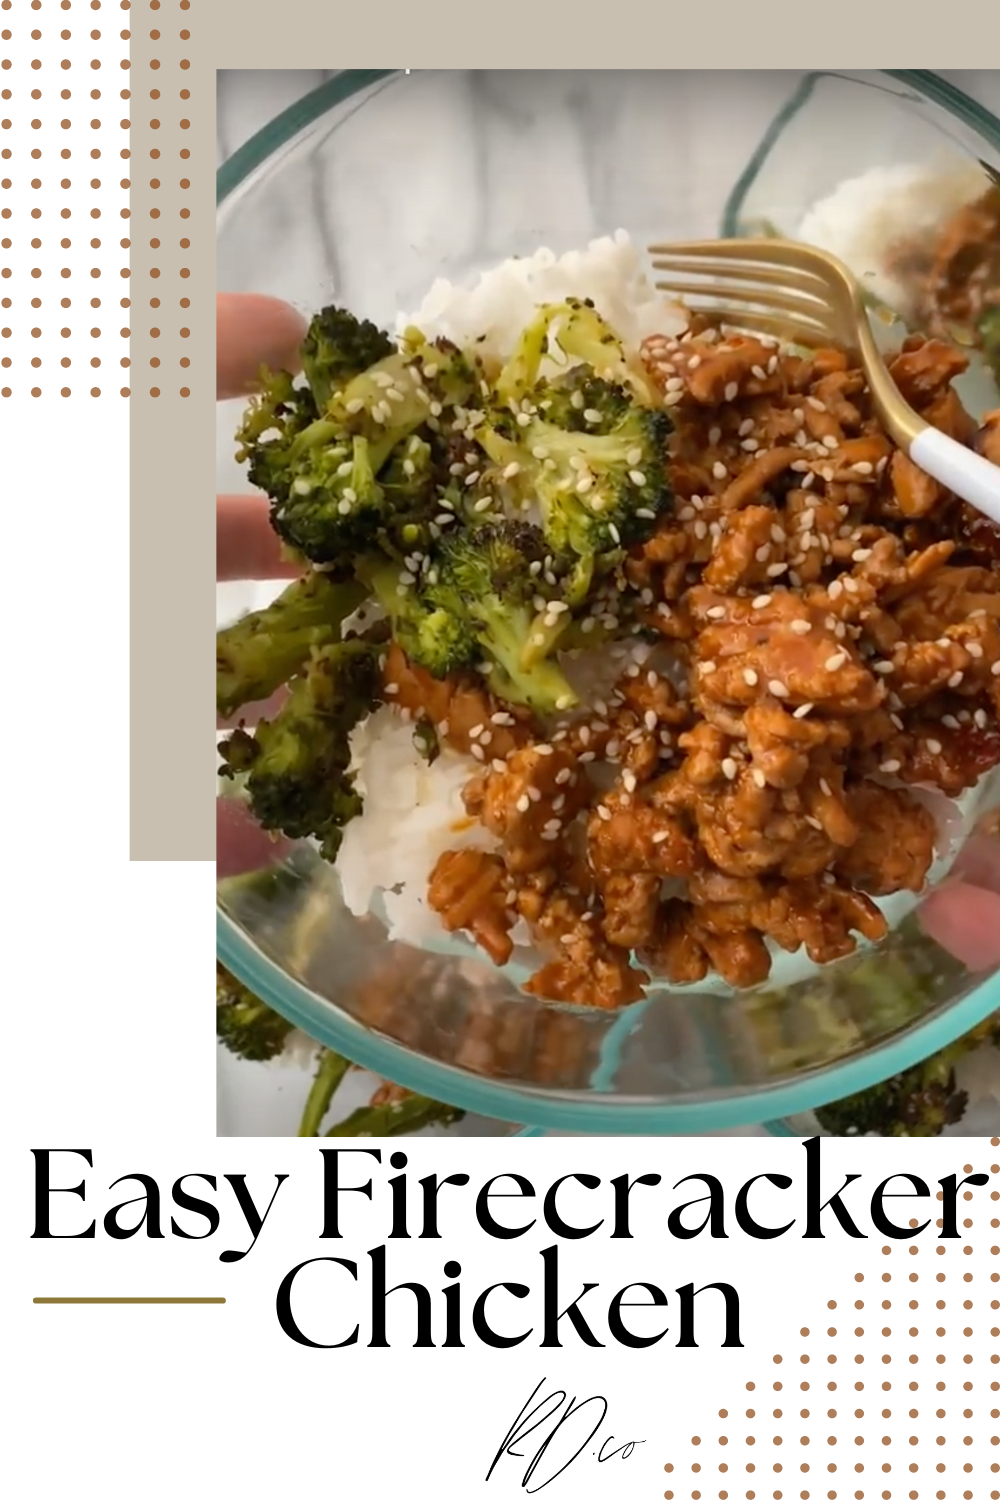 Easy Firecracker Chicken pin